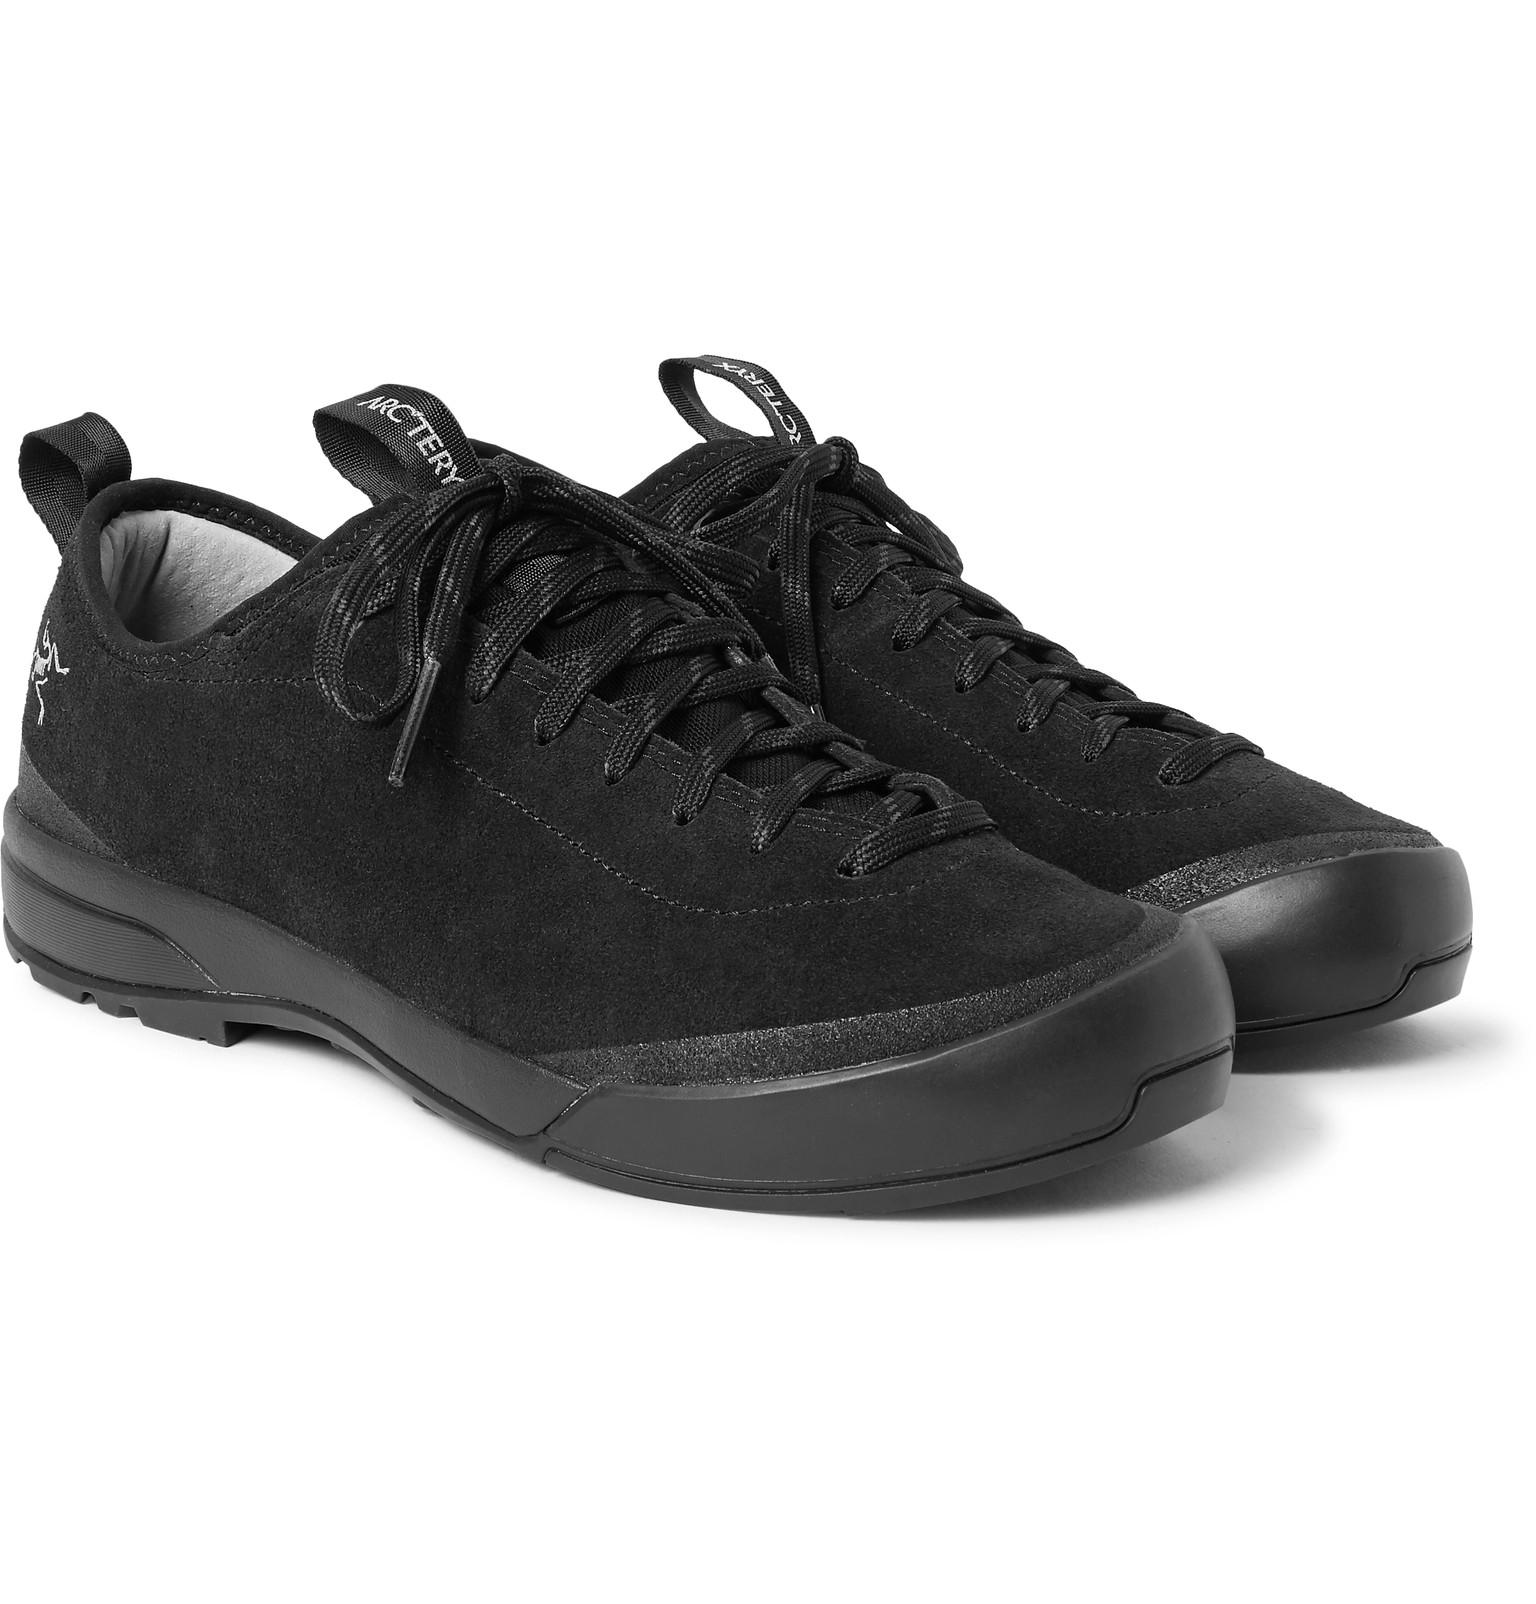 Arc'teryx Acrux Sl Suede Hiking Sneakers in Black for Men - Lyst